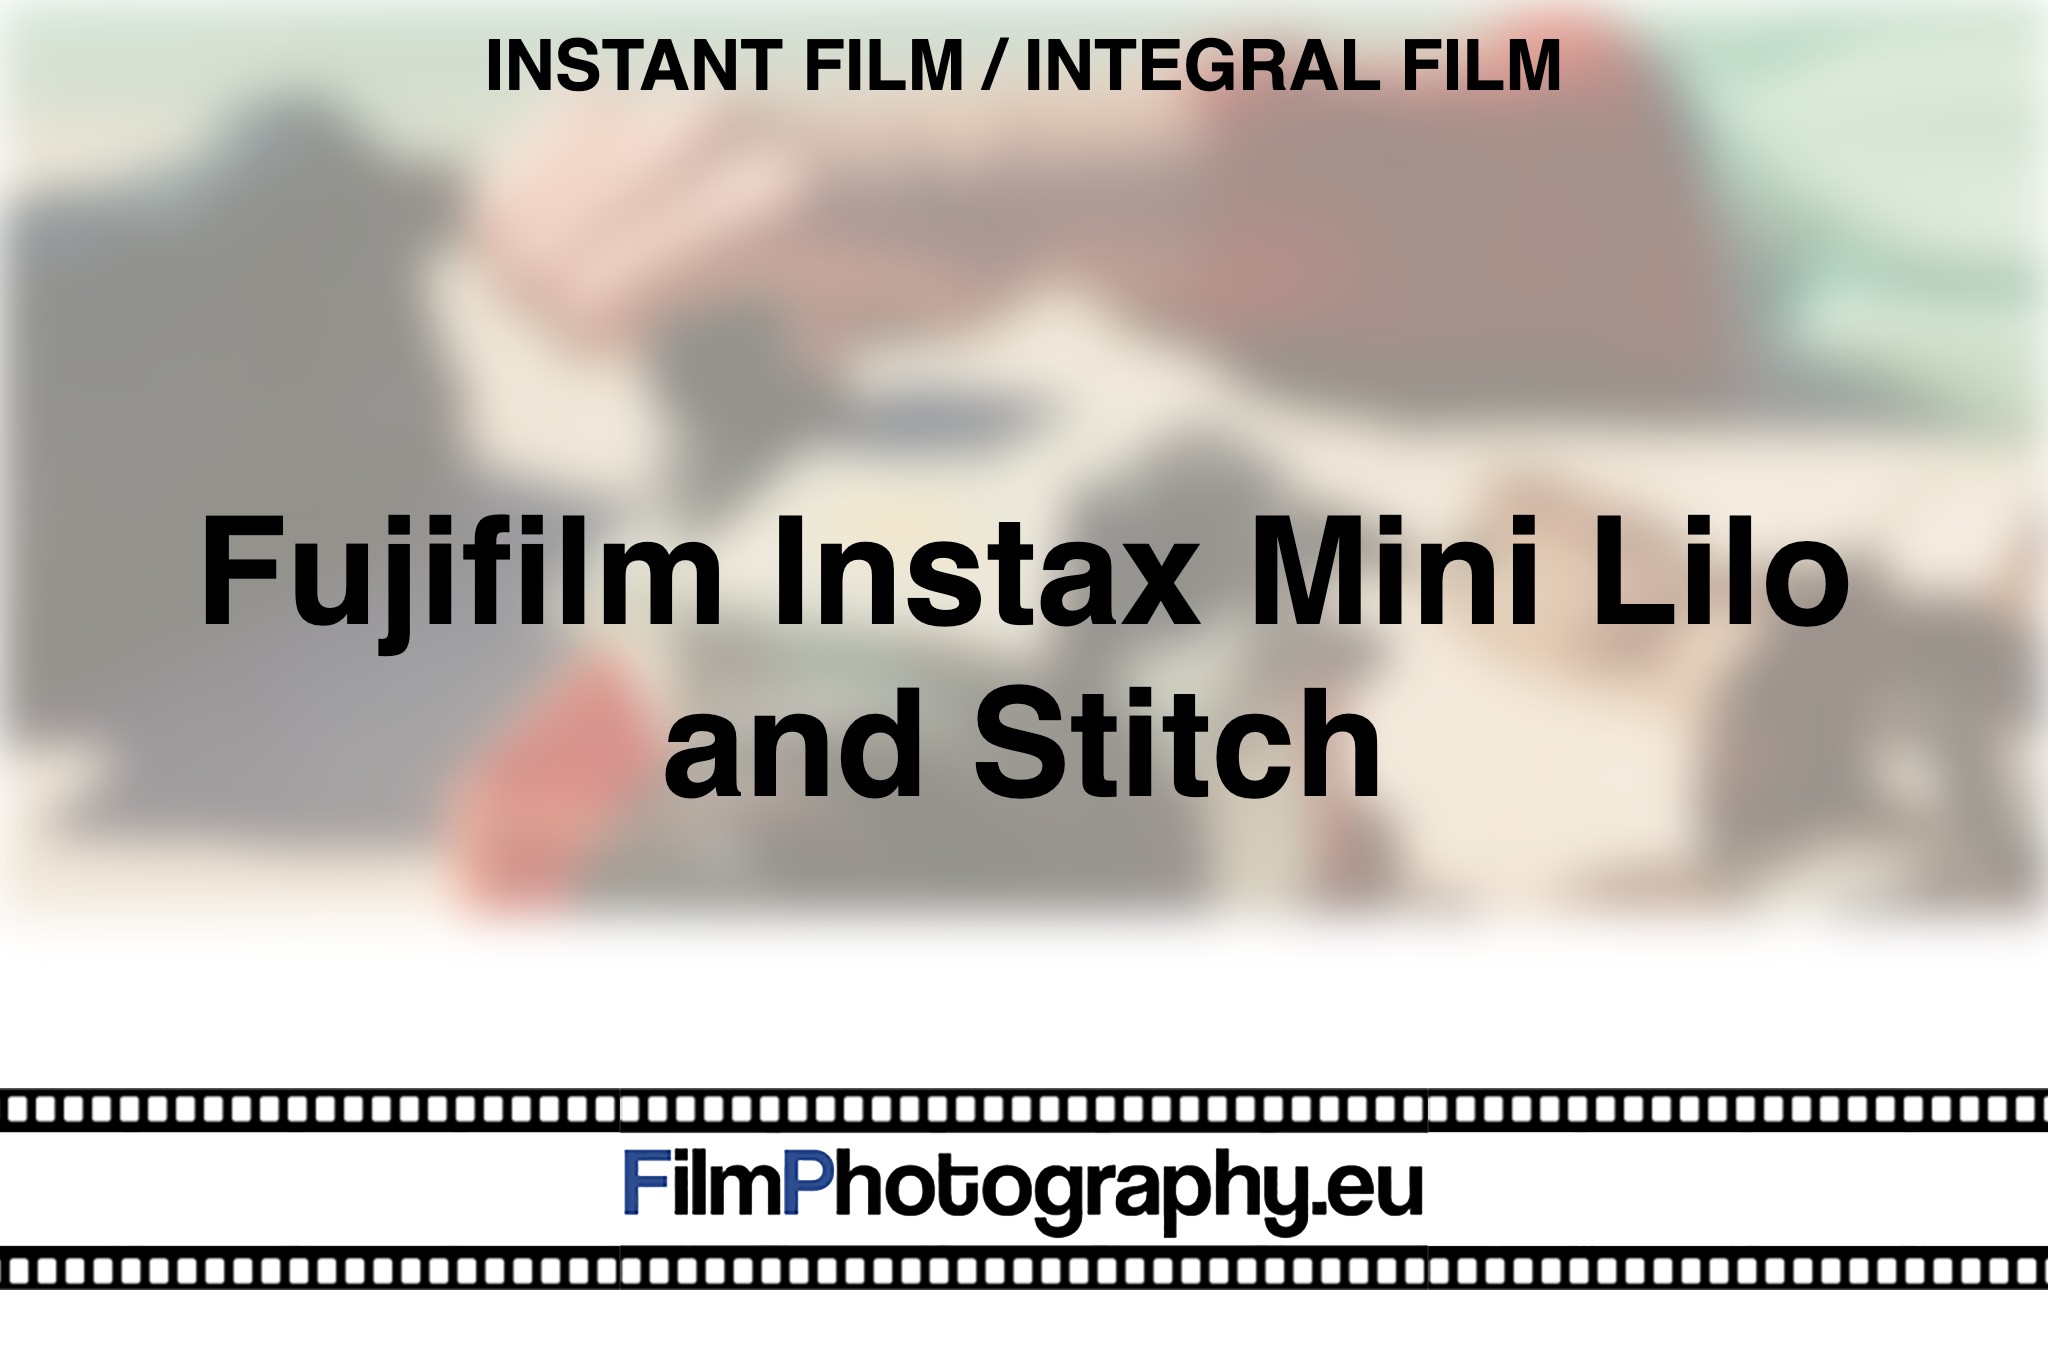 fujifilm-instax-mini-lilo-and-stitch-instant-film-integral-film-bnv